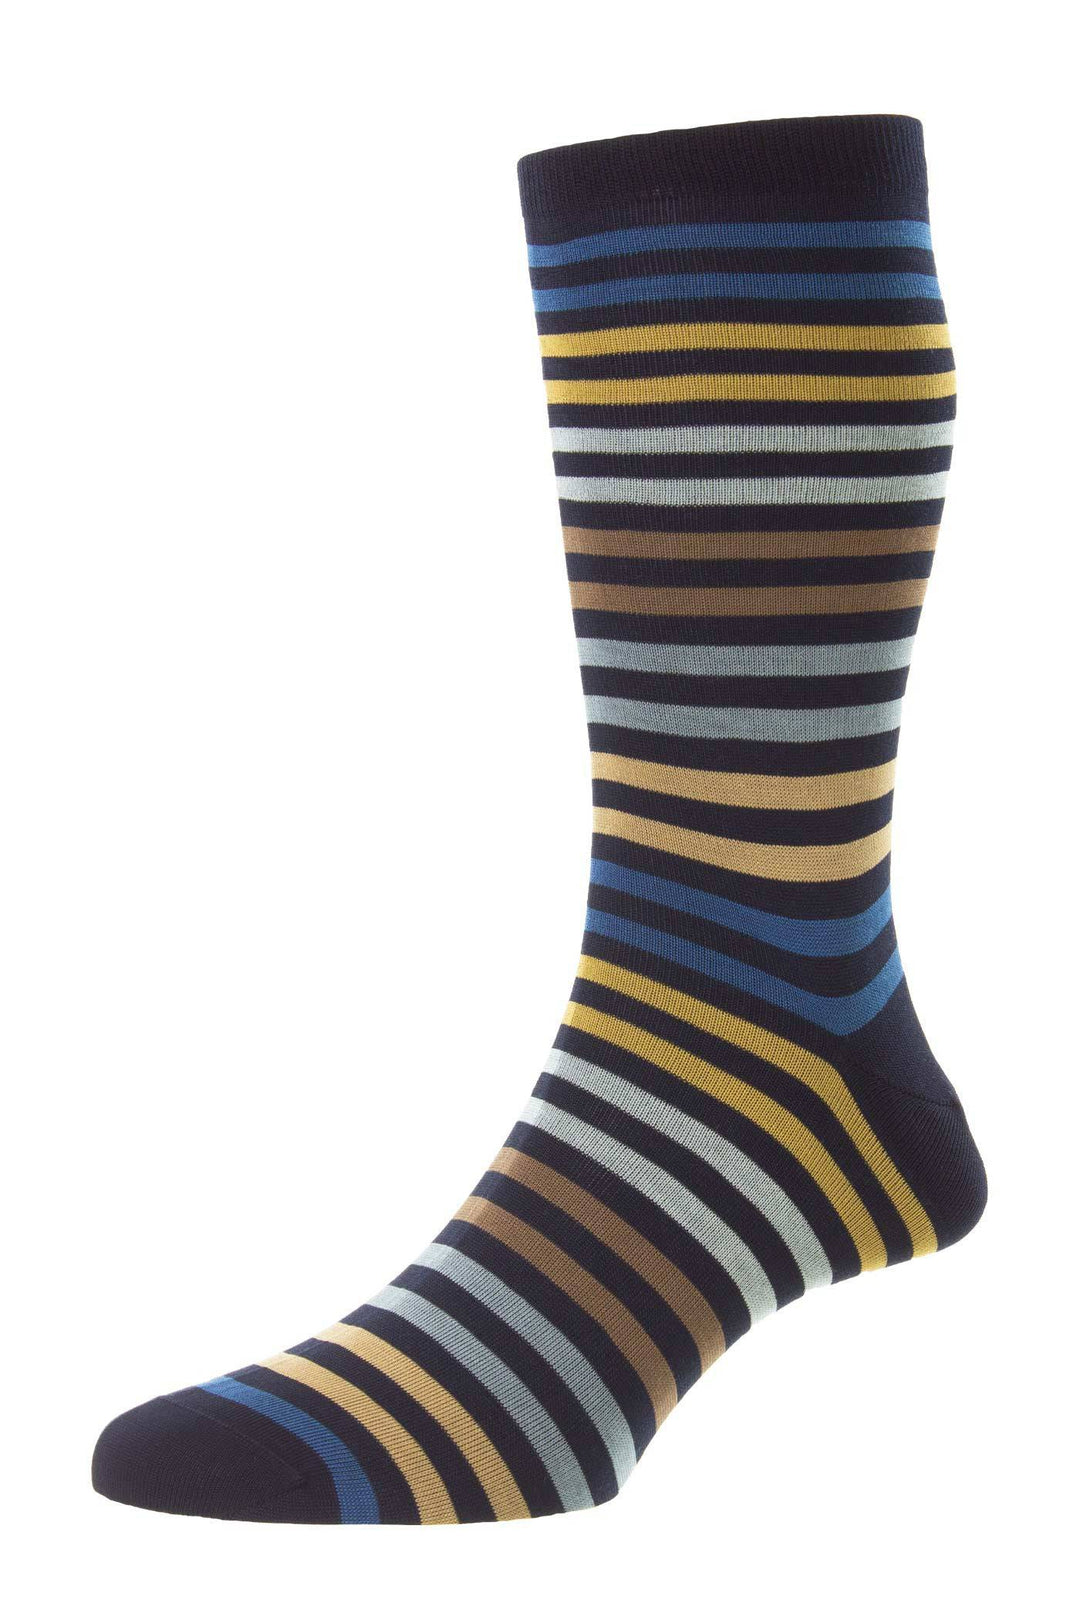 Pantherella Kilburn Striped Socks